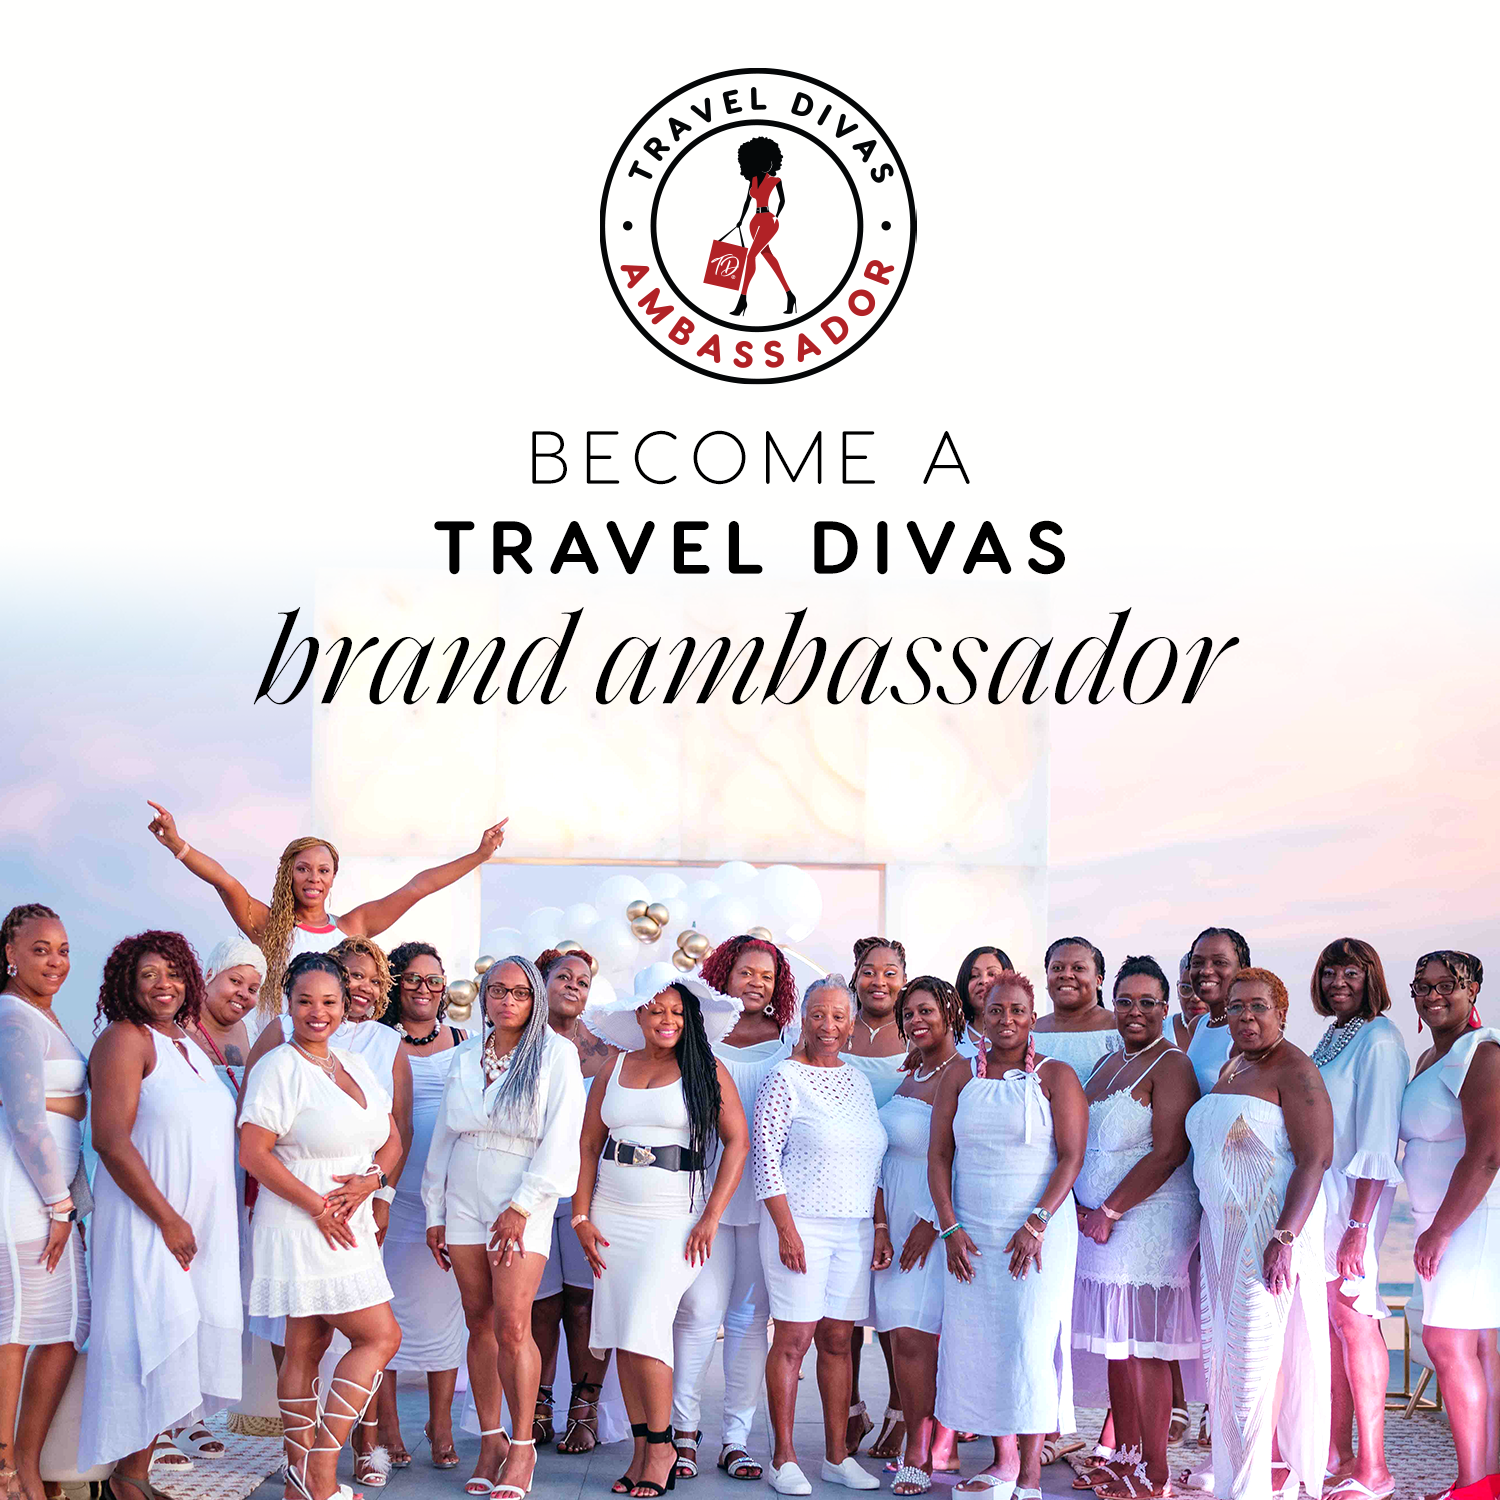 Travel Divas social graphics design example